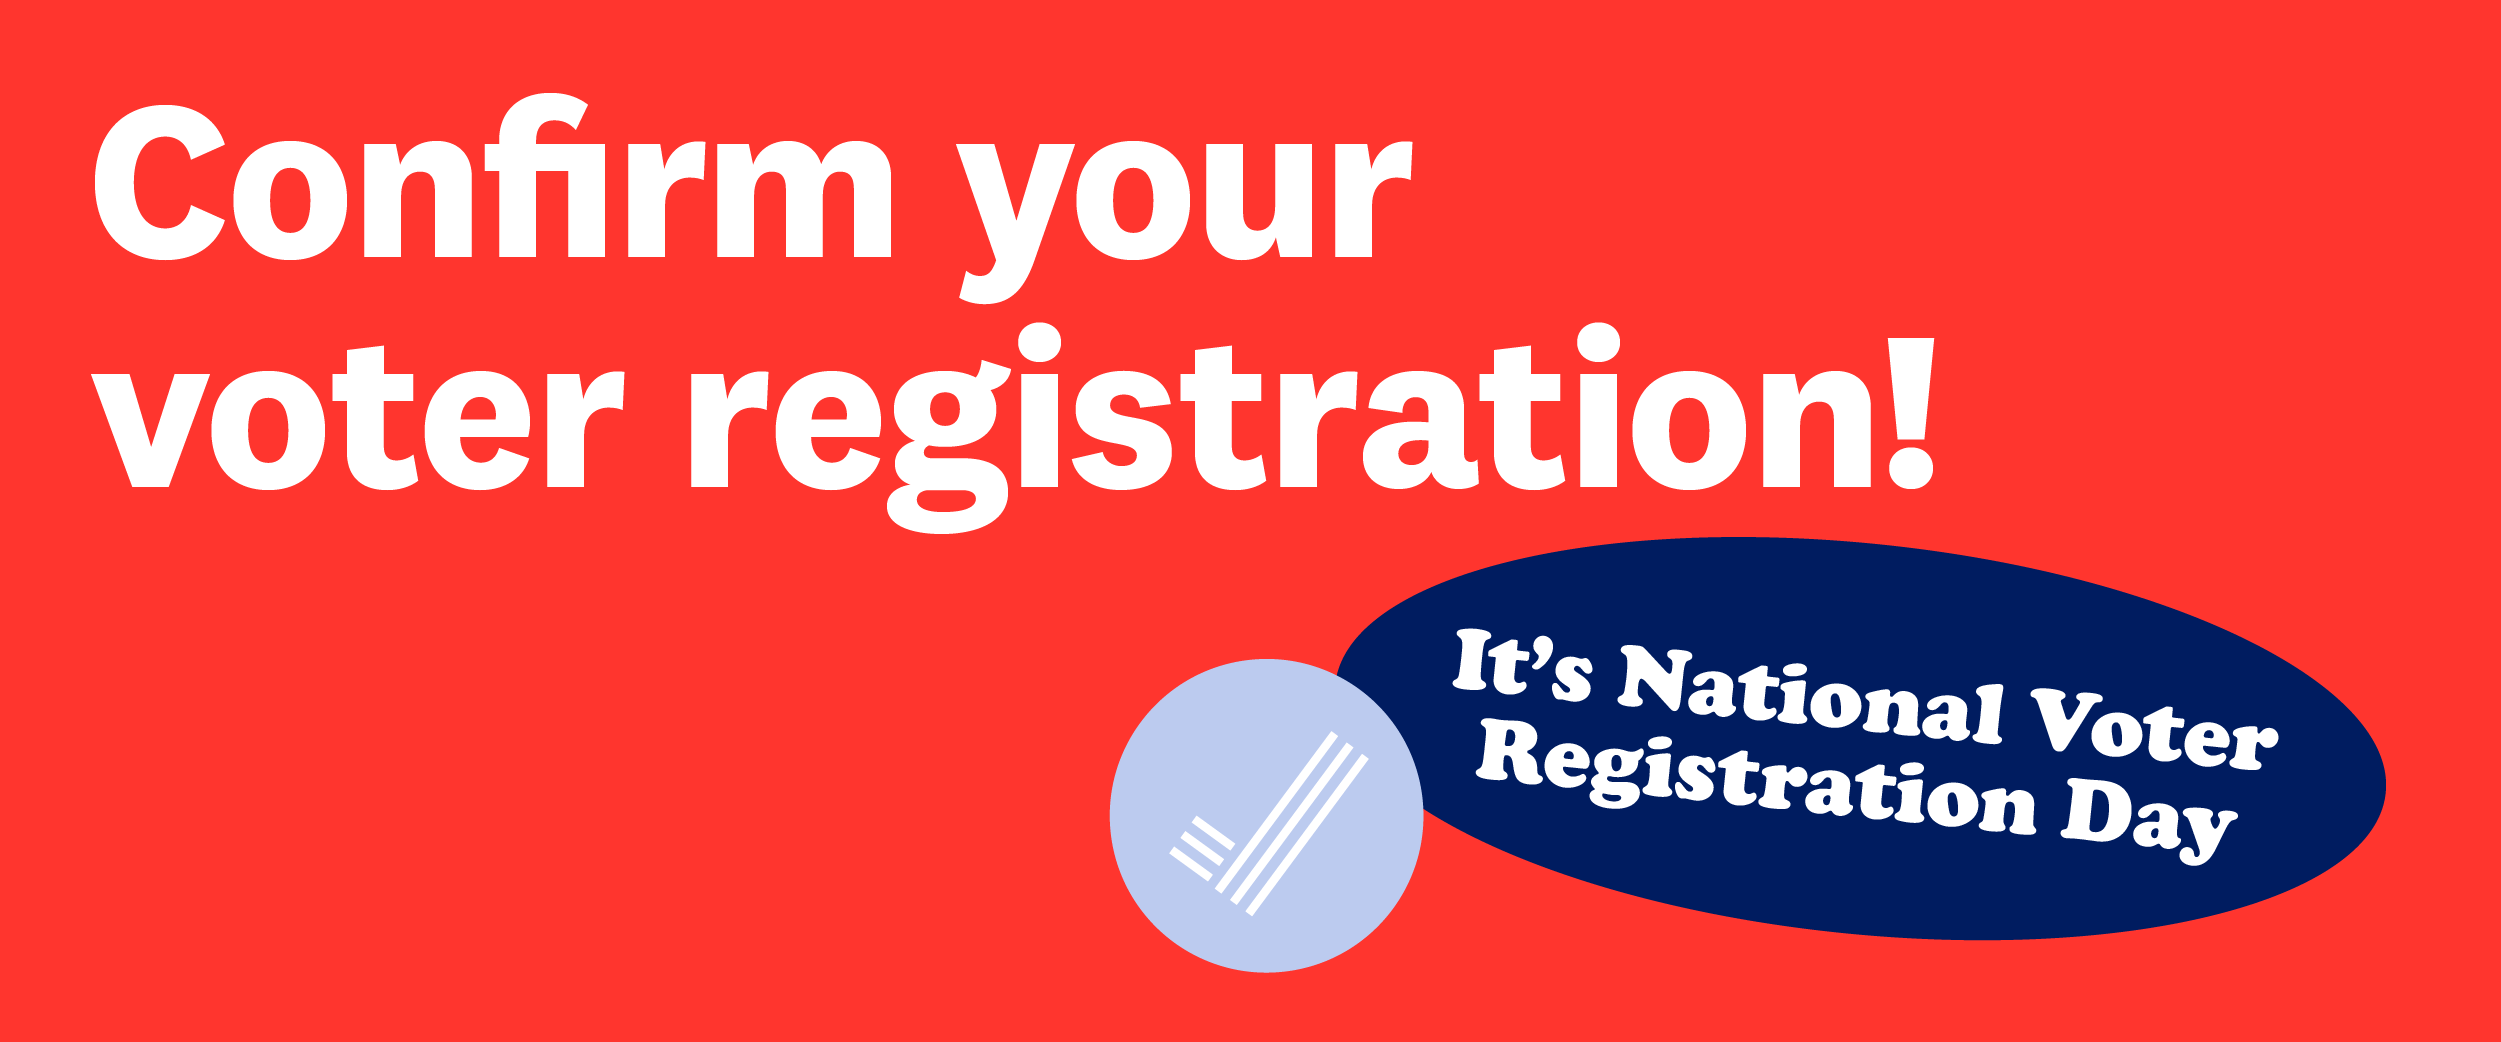 Confirm your voter registration!